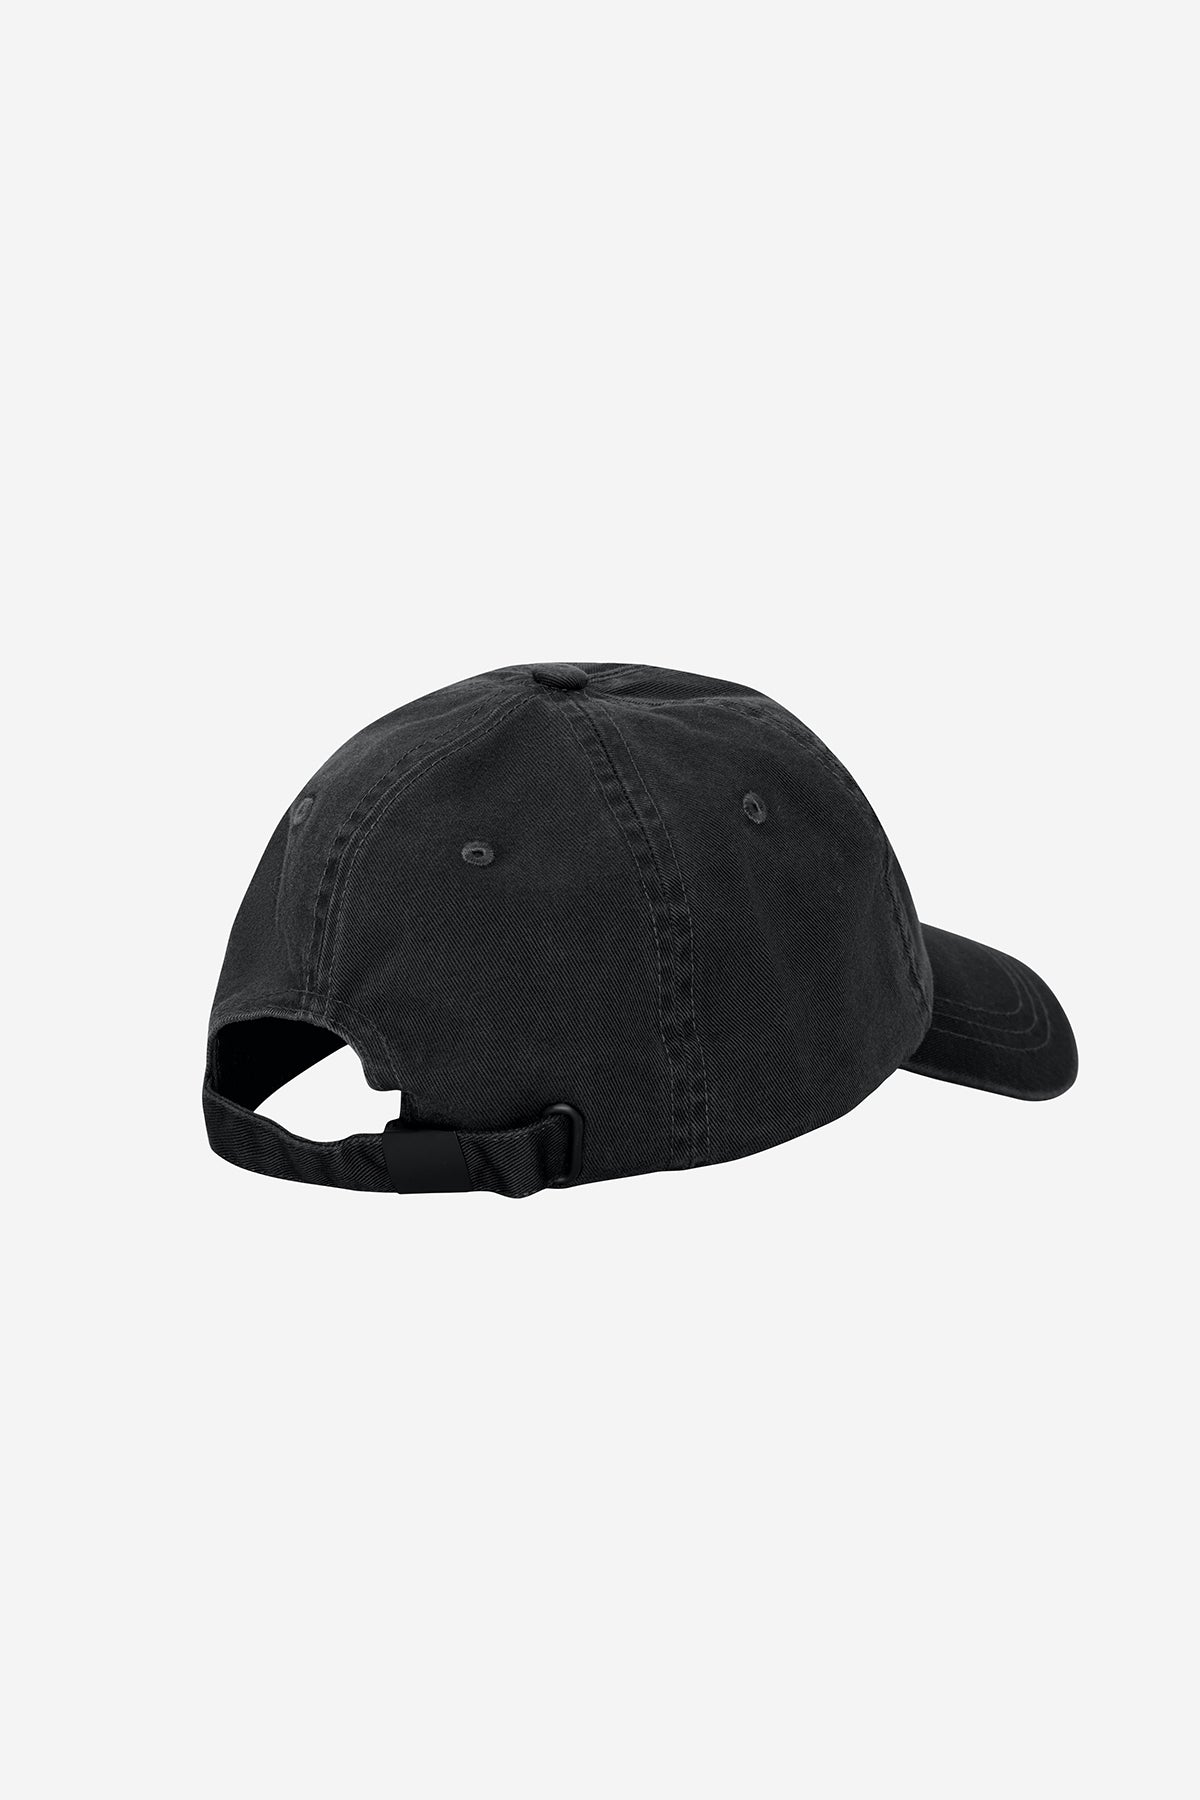 BLACK ECOALF CAP 